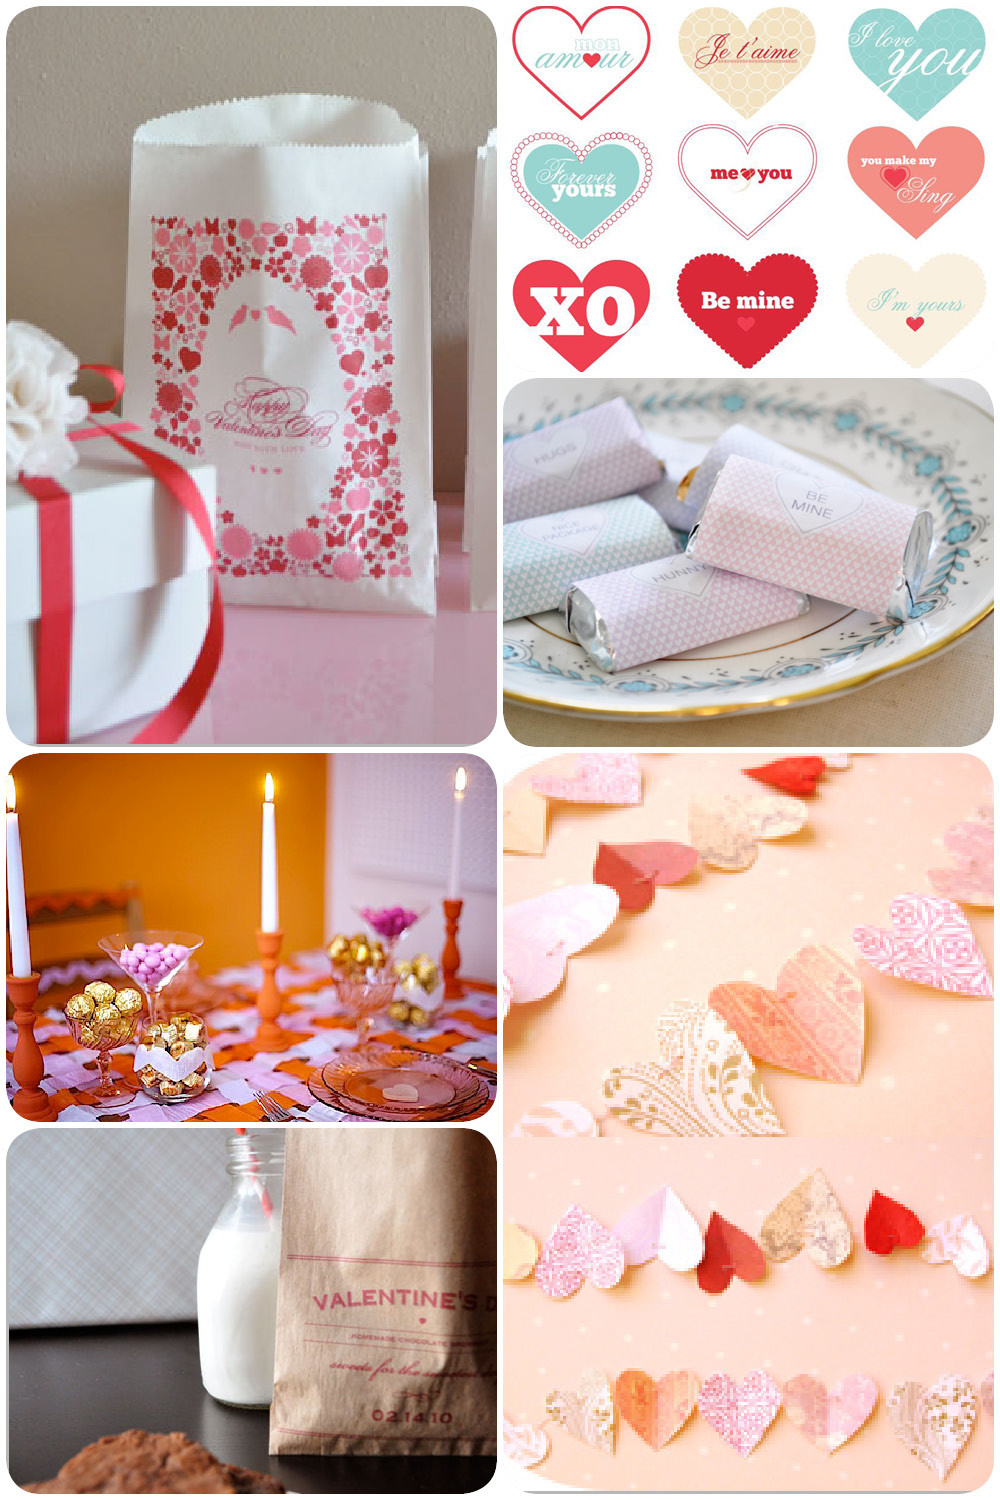 Best ideas about DIY Valentine Crafts
. Save or Pin 7 Valentine s Freebies & DIYs Now.